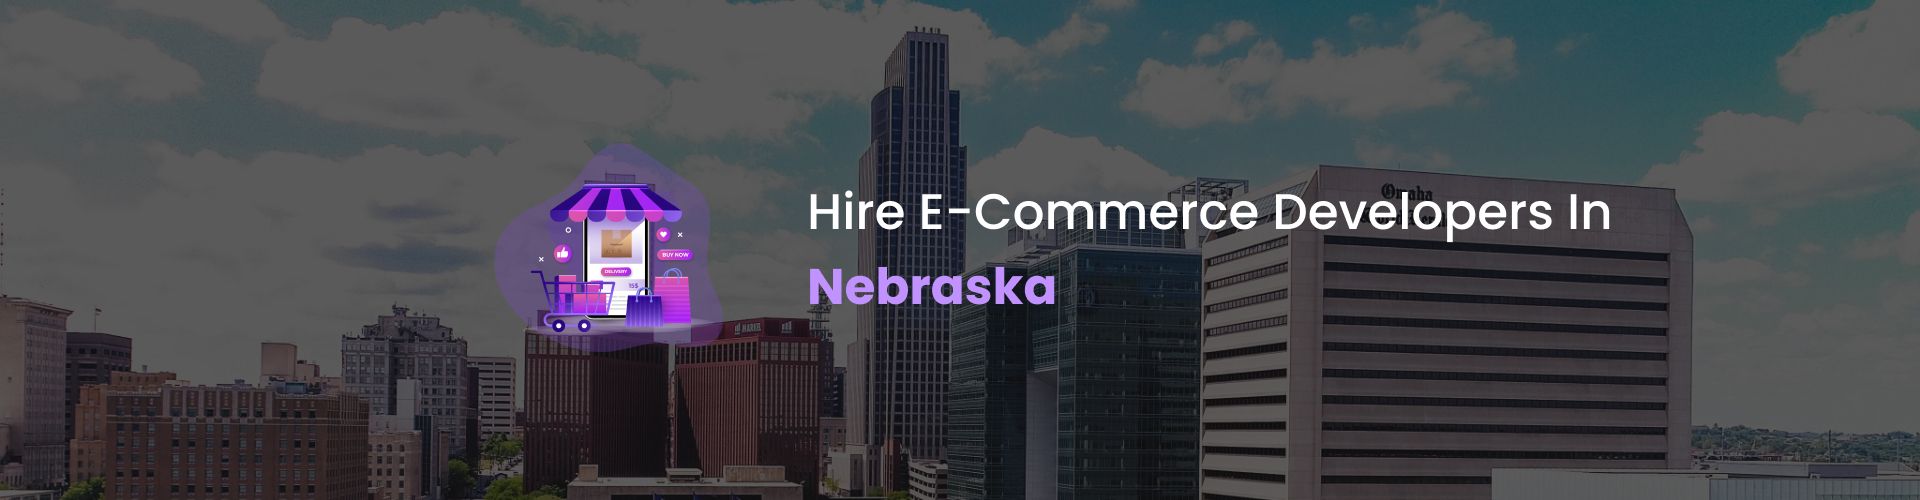 hire ecommerce developers in nebraska